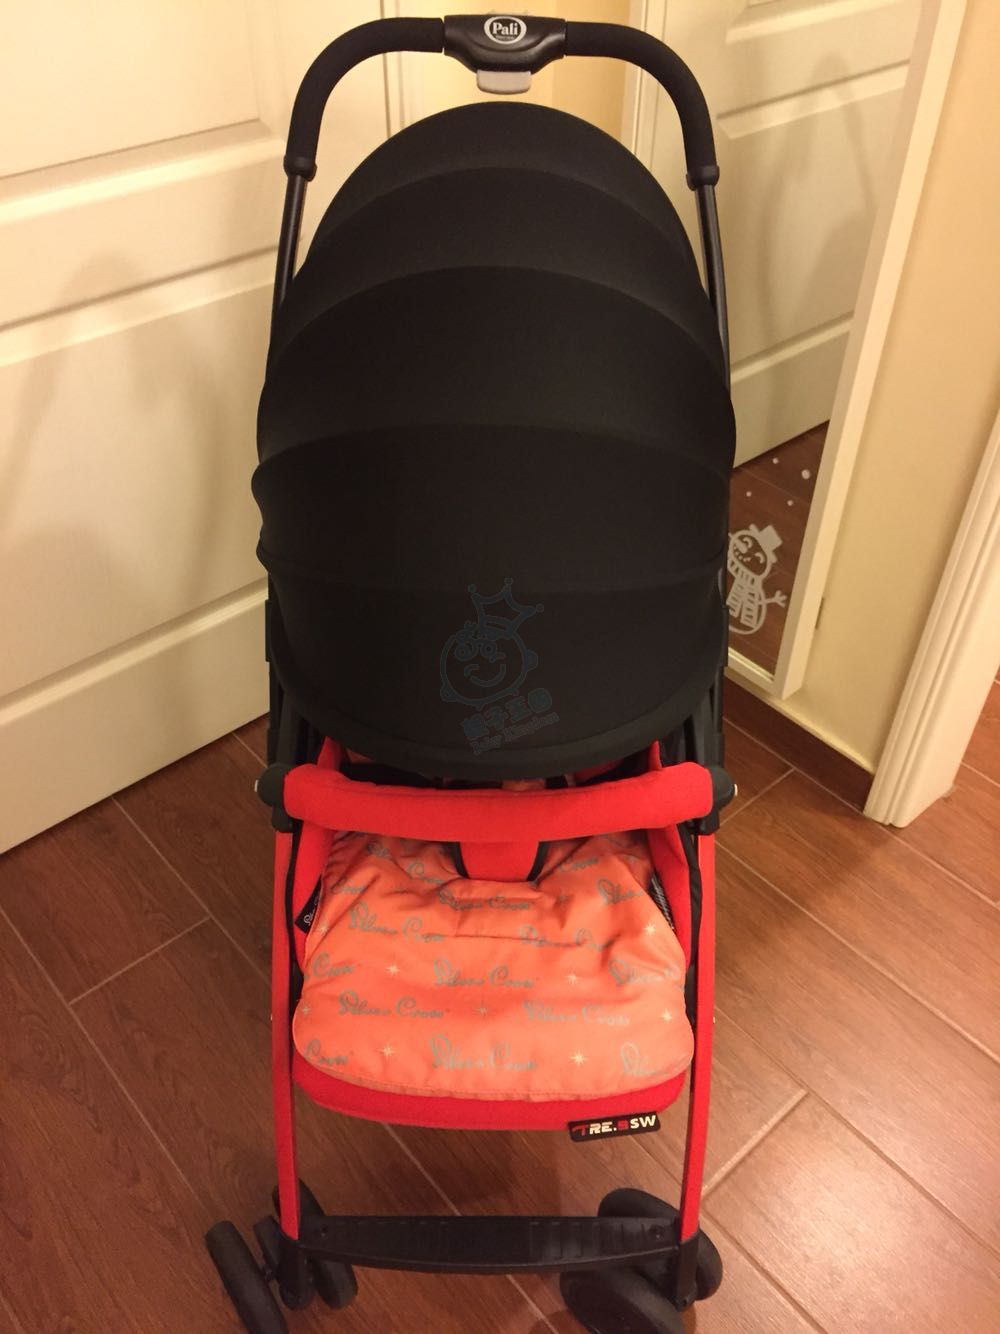 $1000 baby stroller